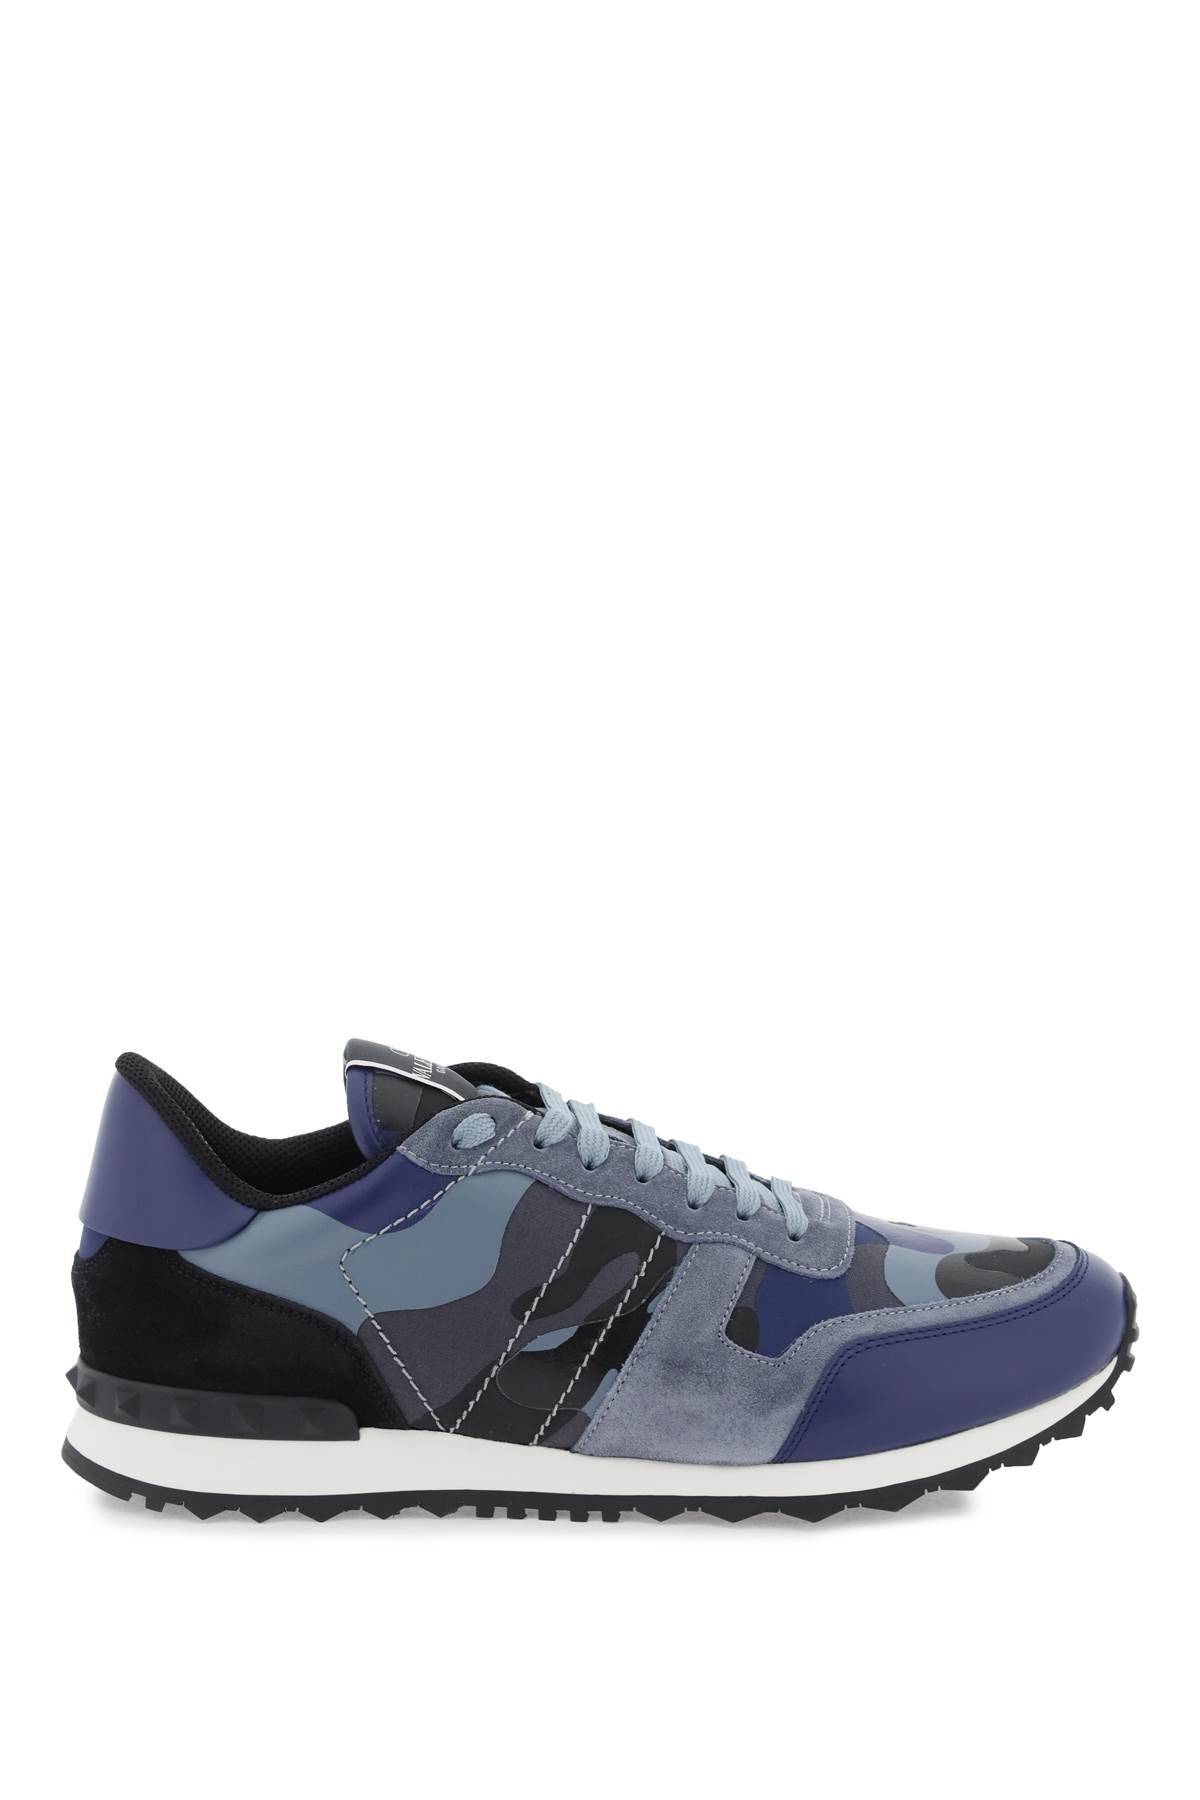 Valentino Garavani Camouflage Rockrunner Sneakers In Grey,black,blue